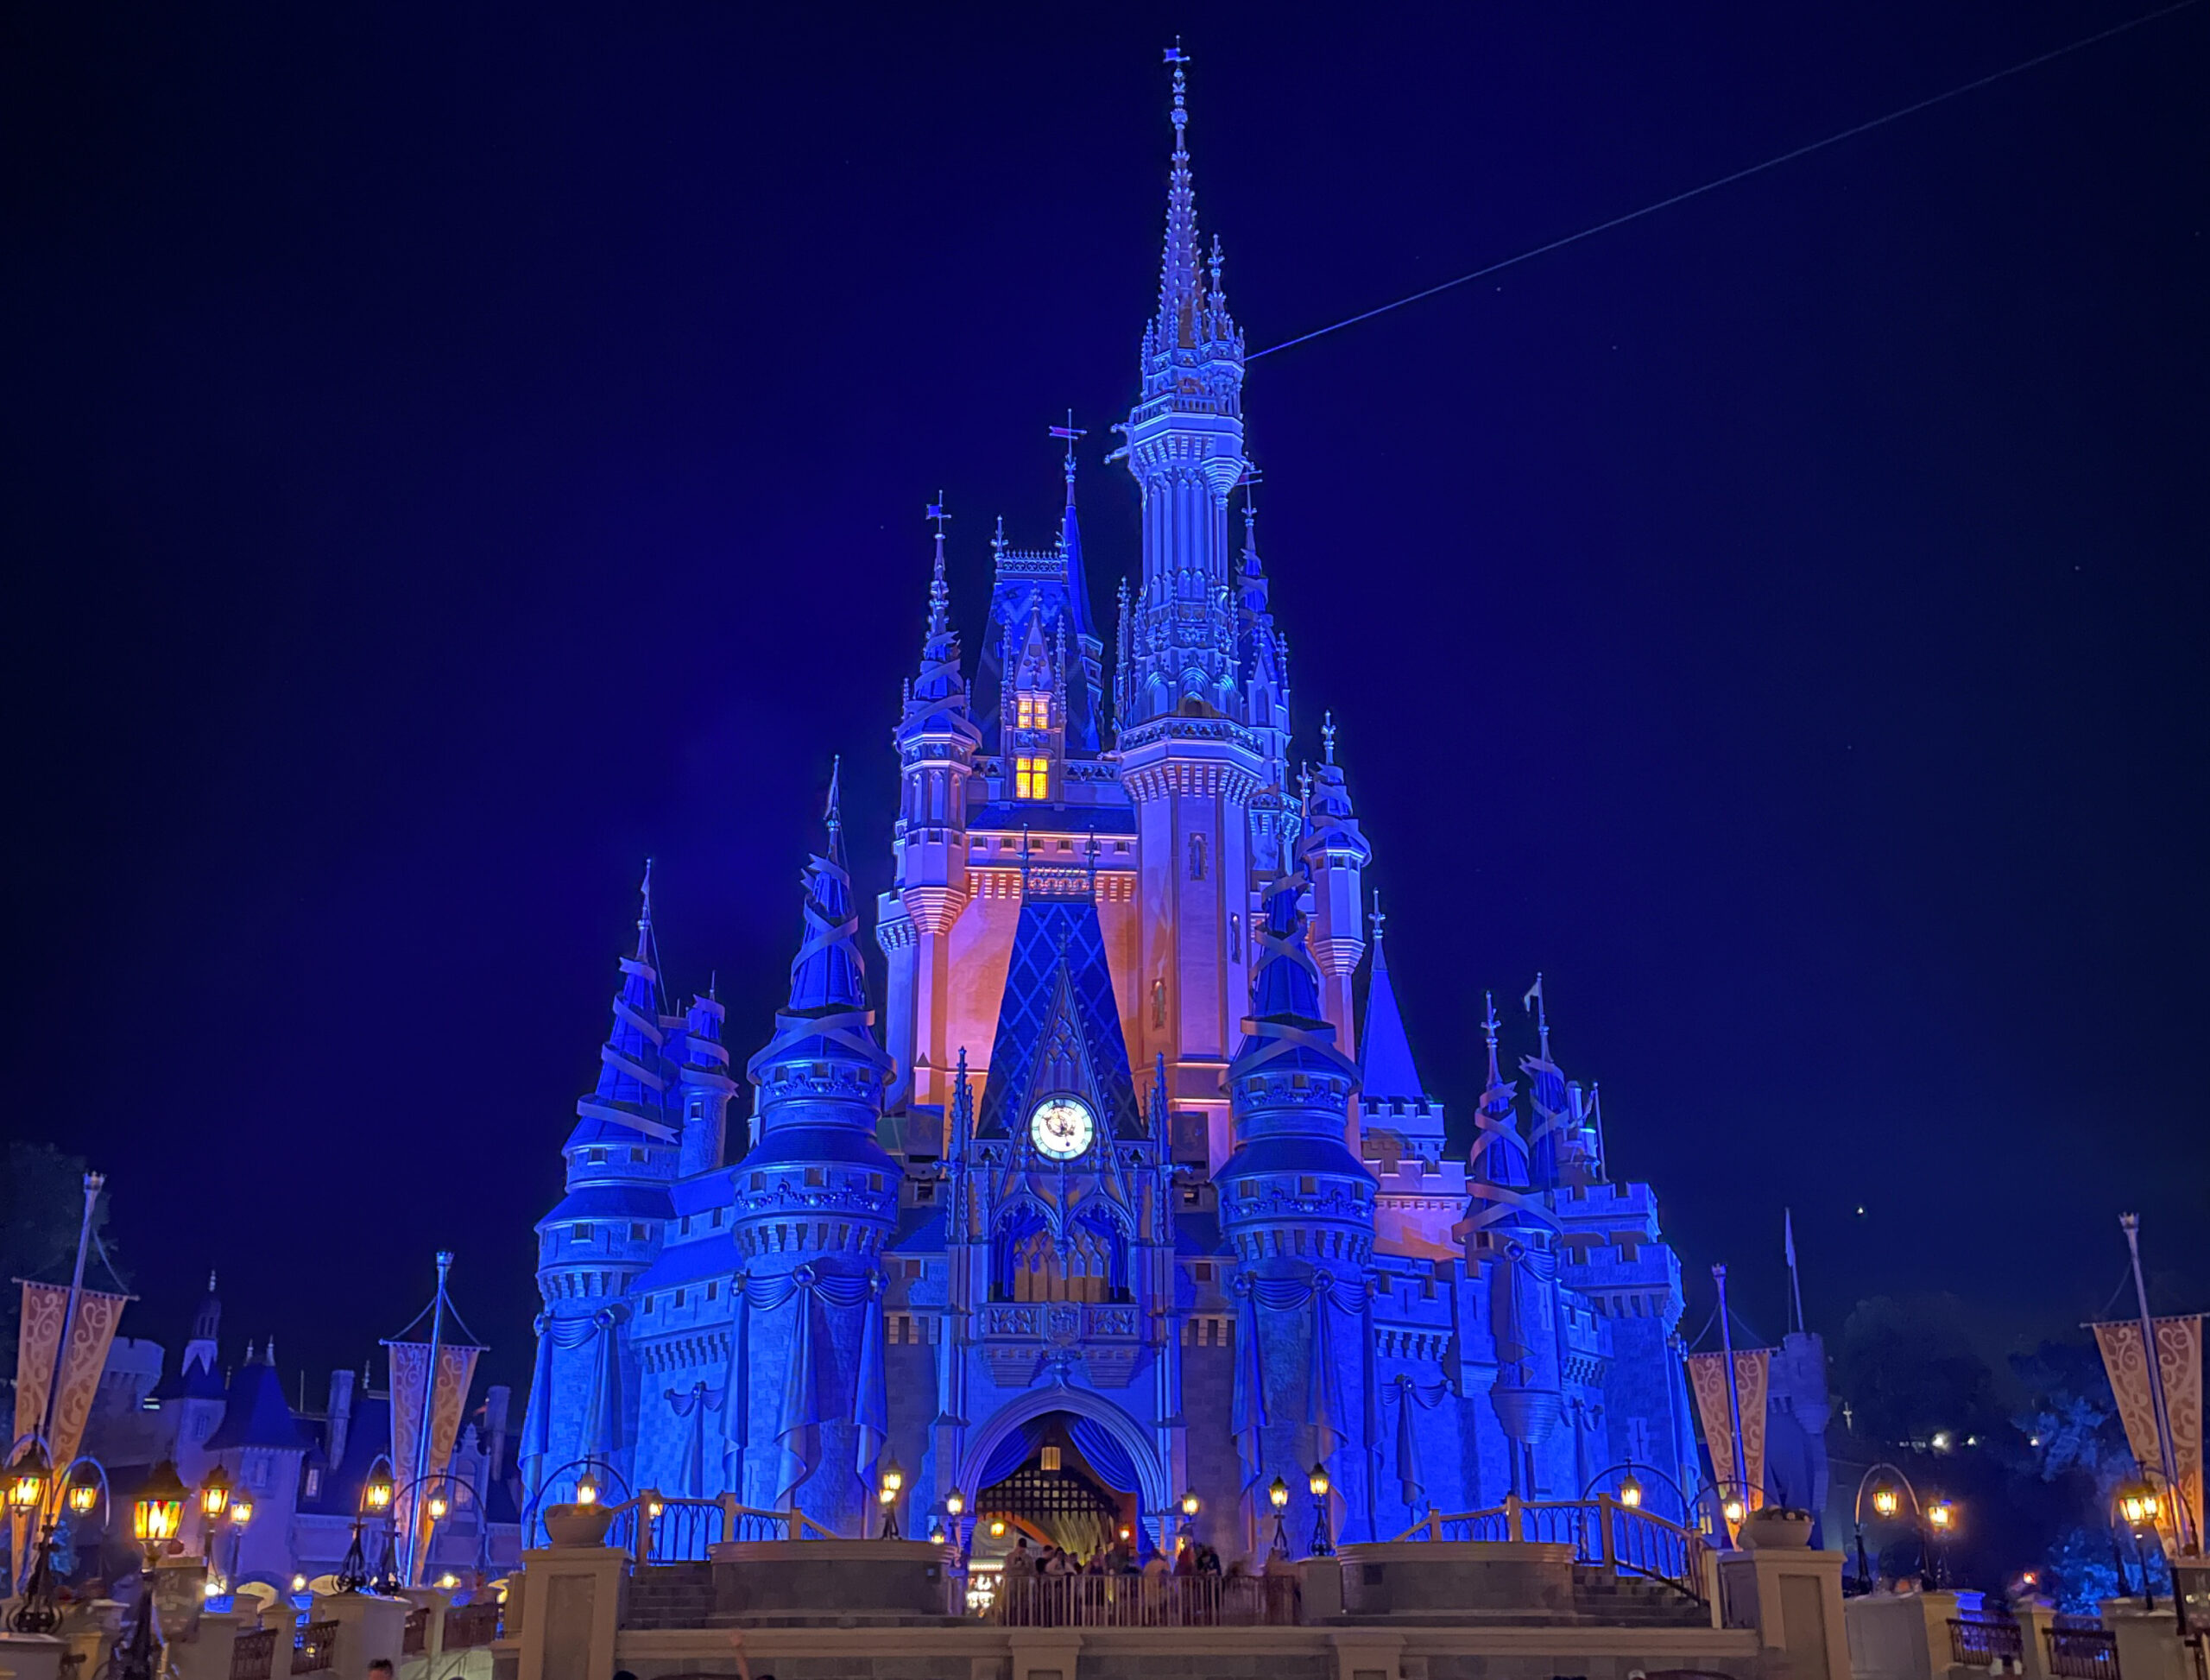 Walt Disney World Castle at night